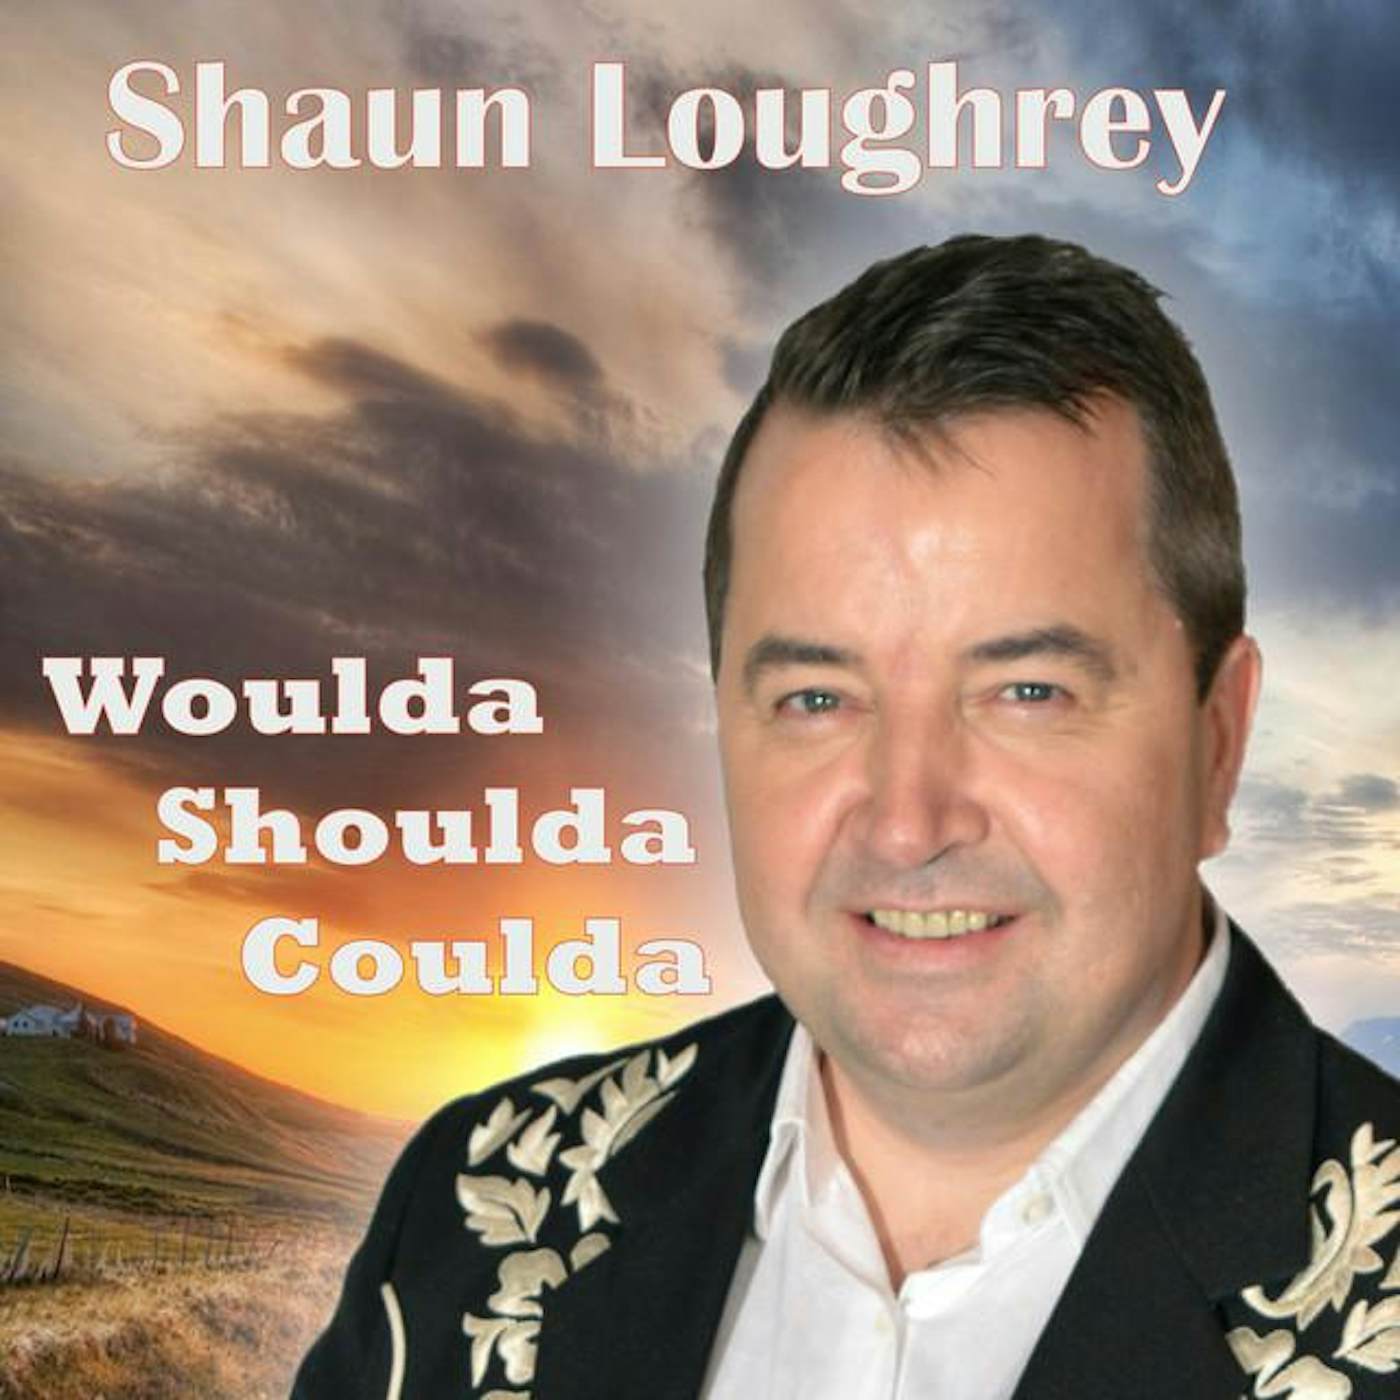 Shaun Loughrey